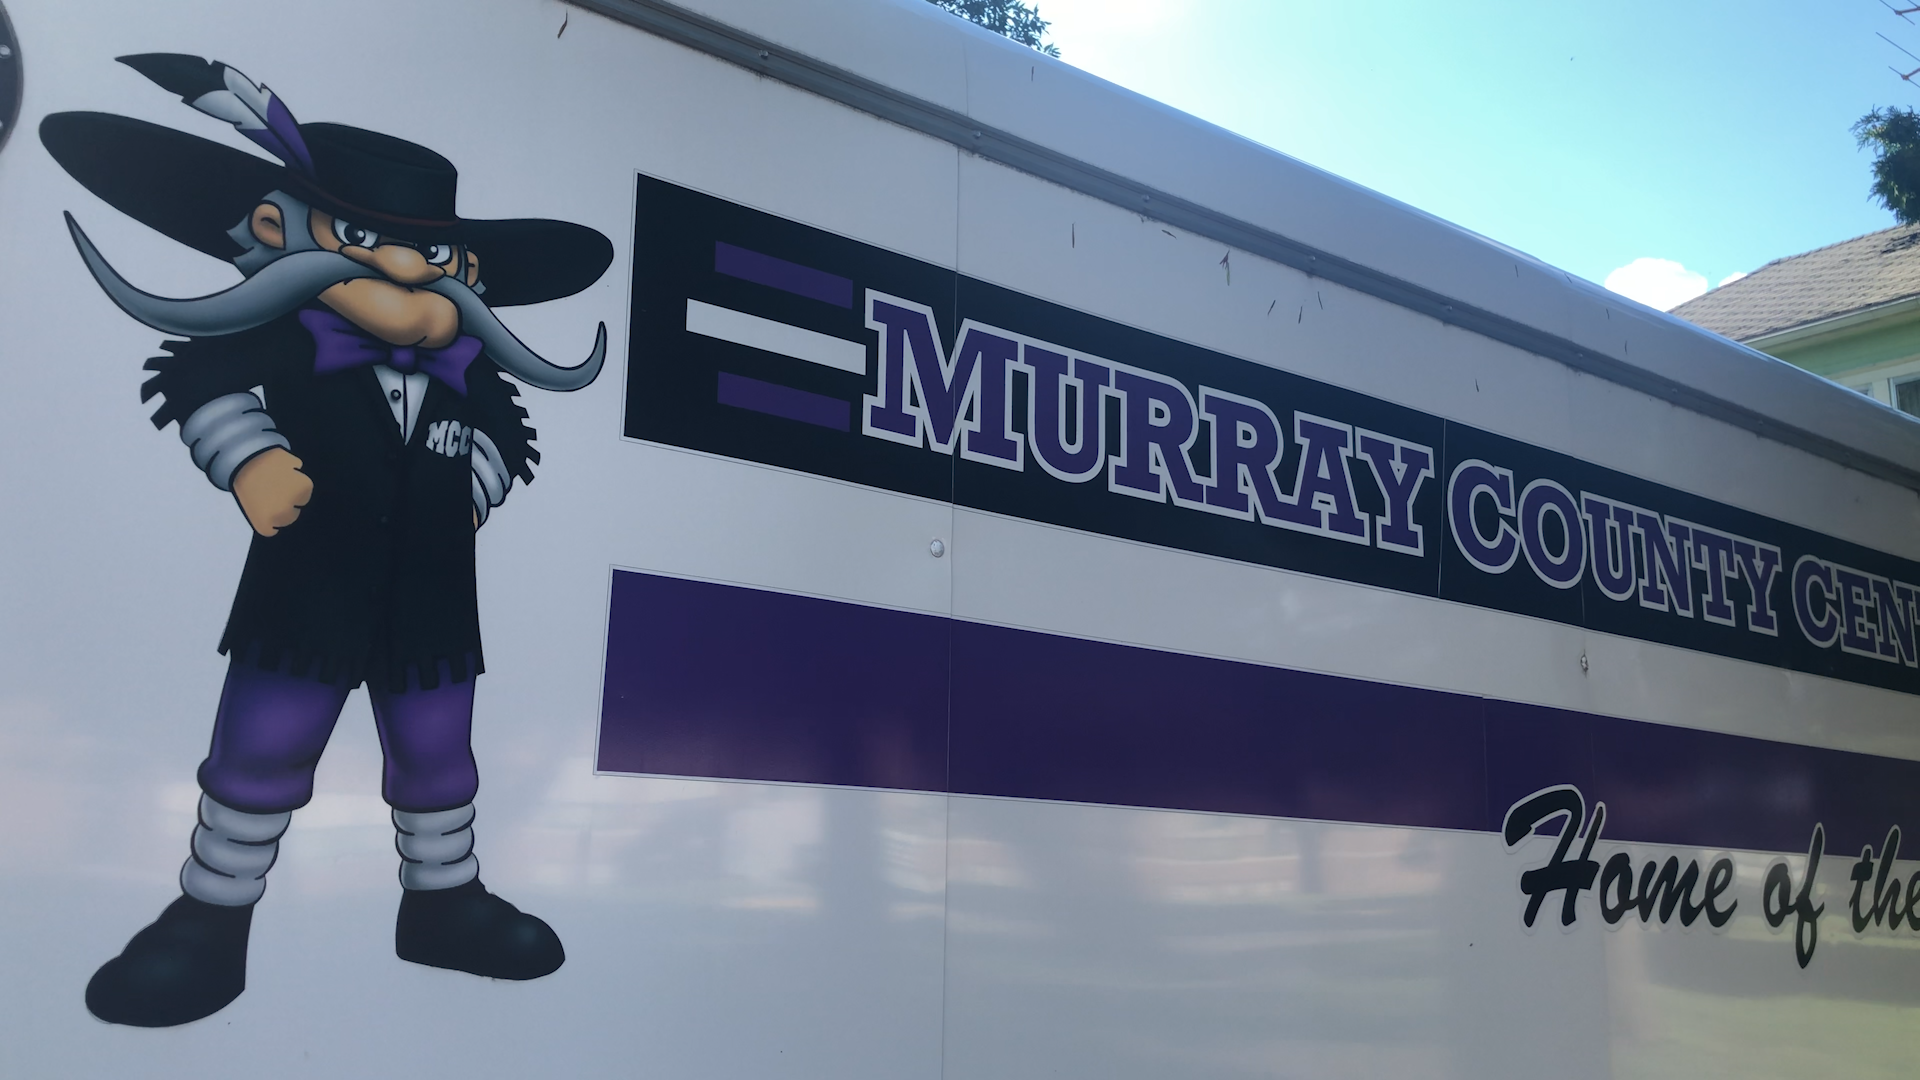 Murray County Central school mascot